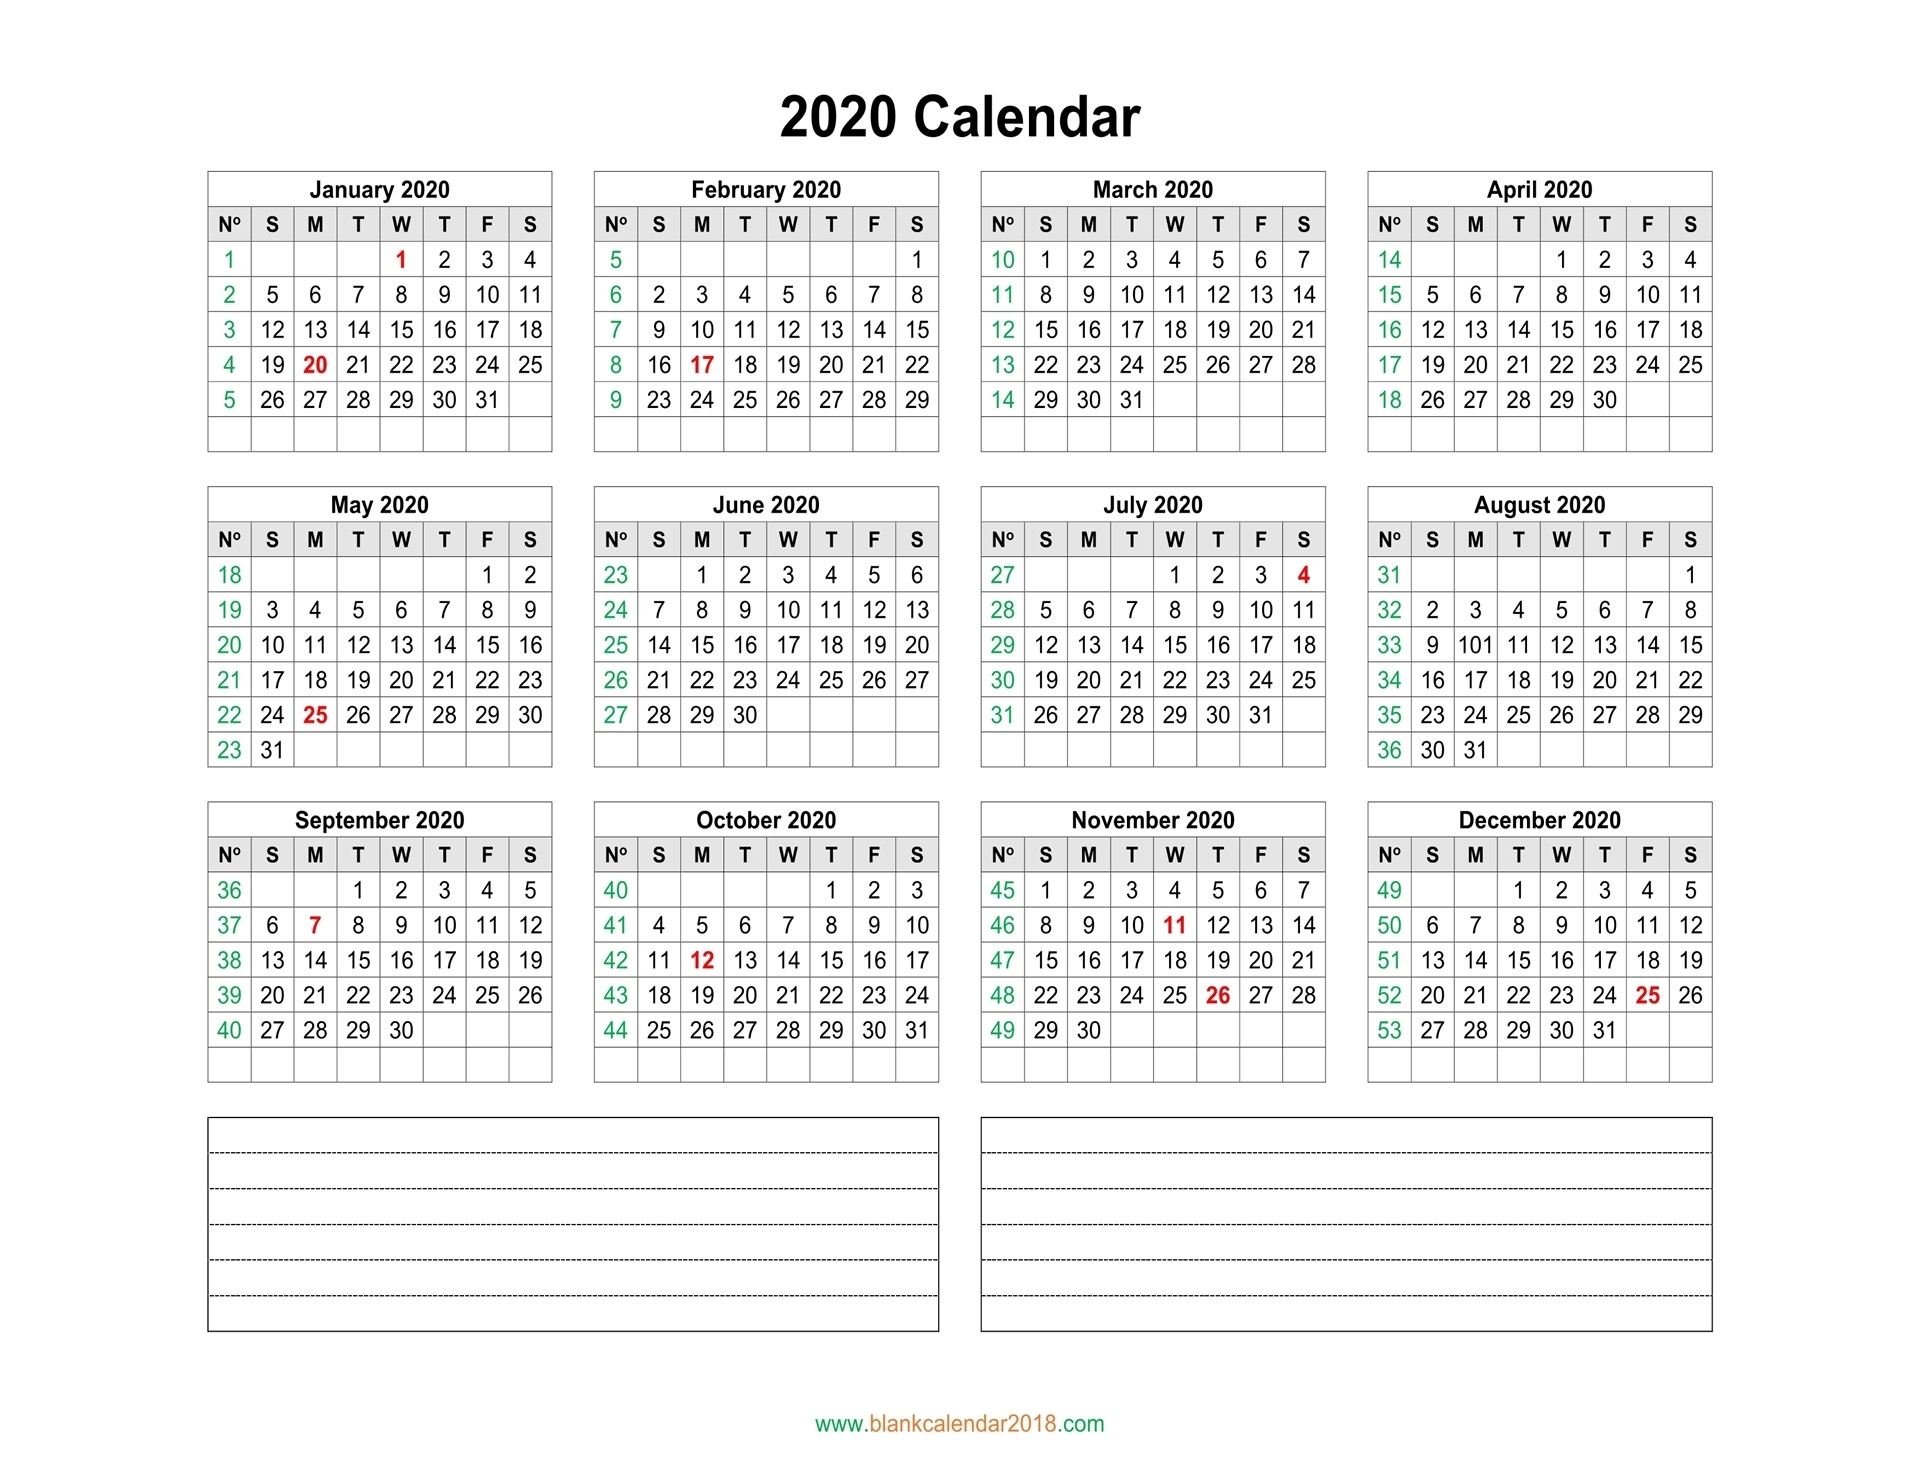 Blank Calendar 2020 Exceptional 2020 Calendar Template With Week Numbers